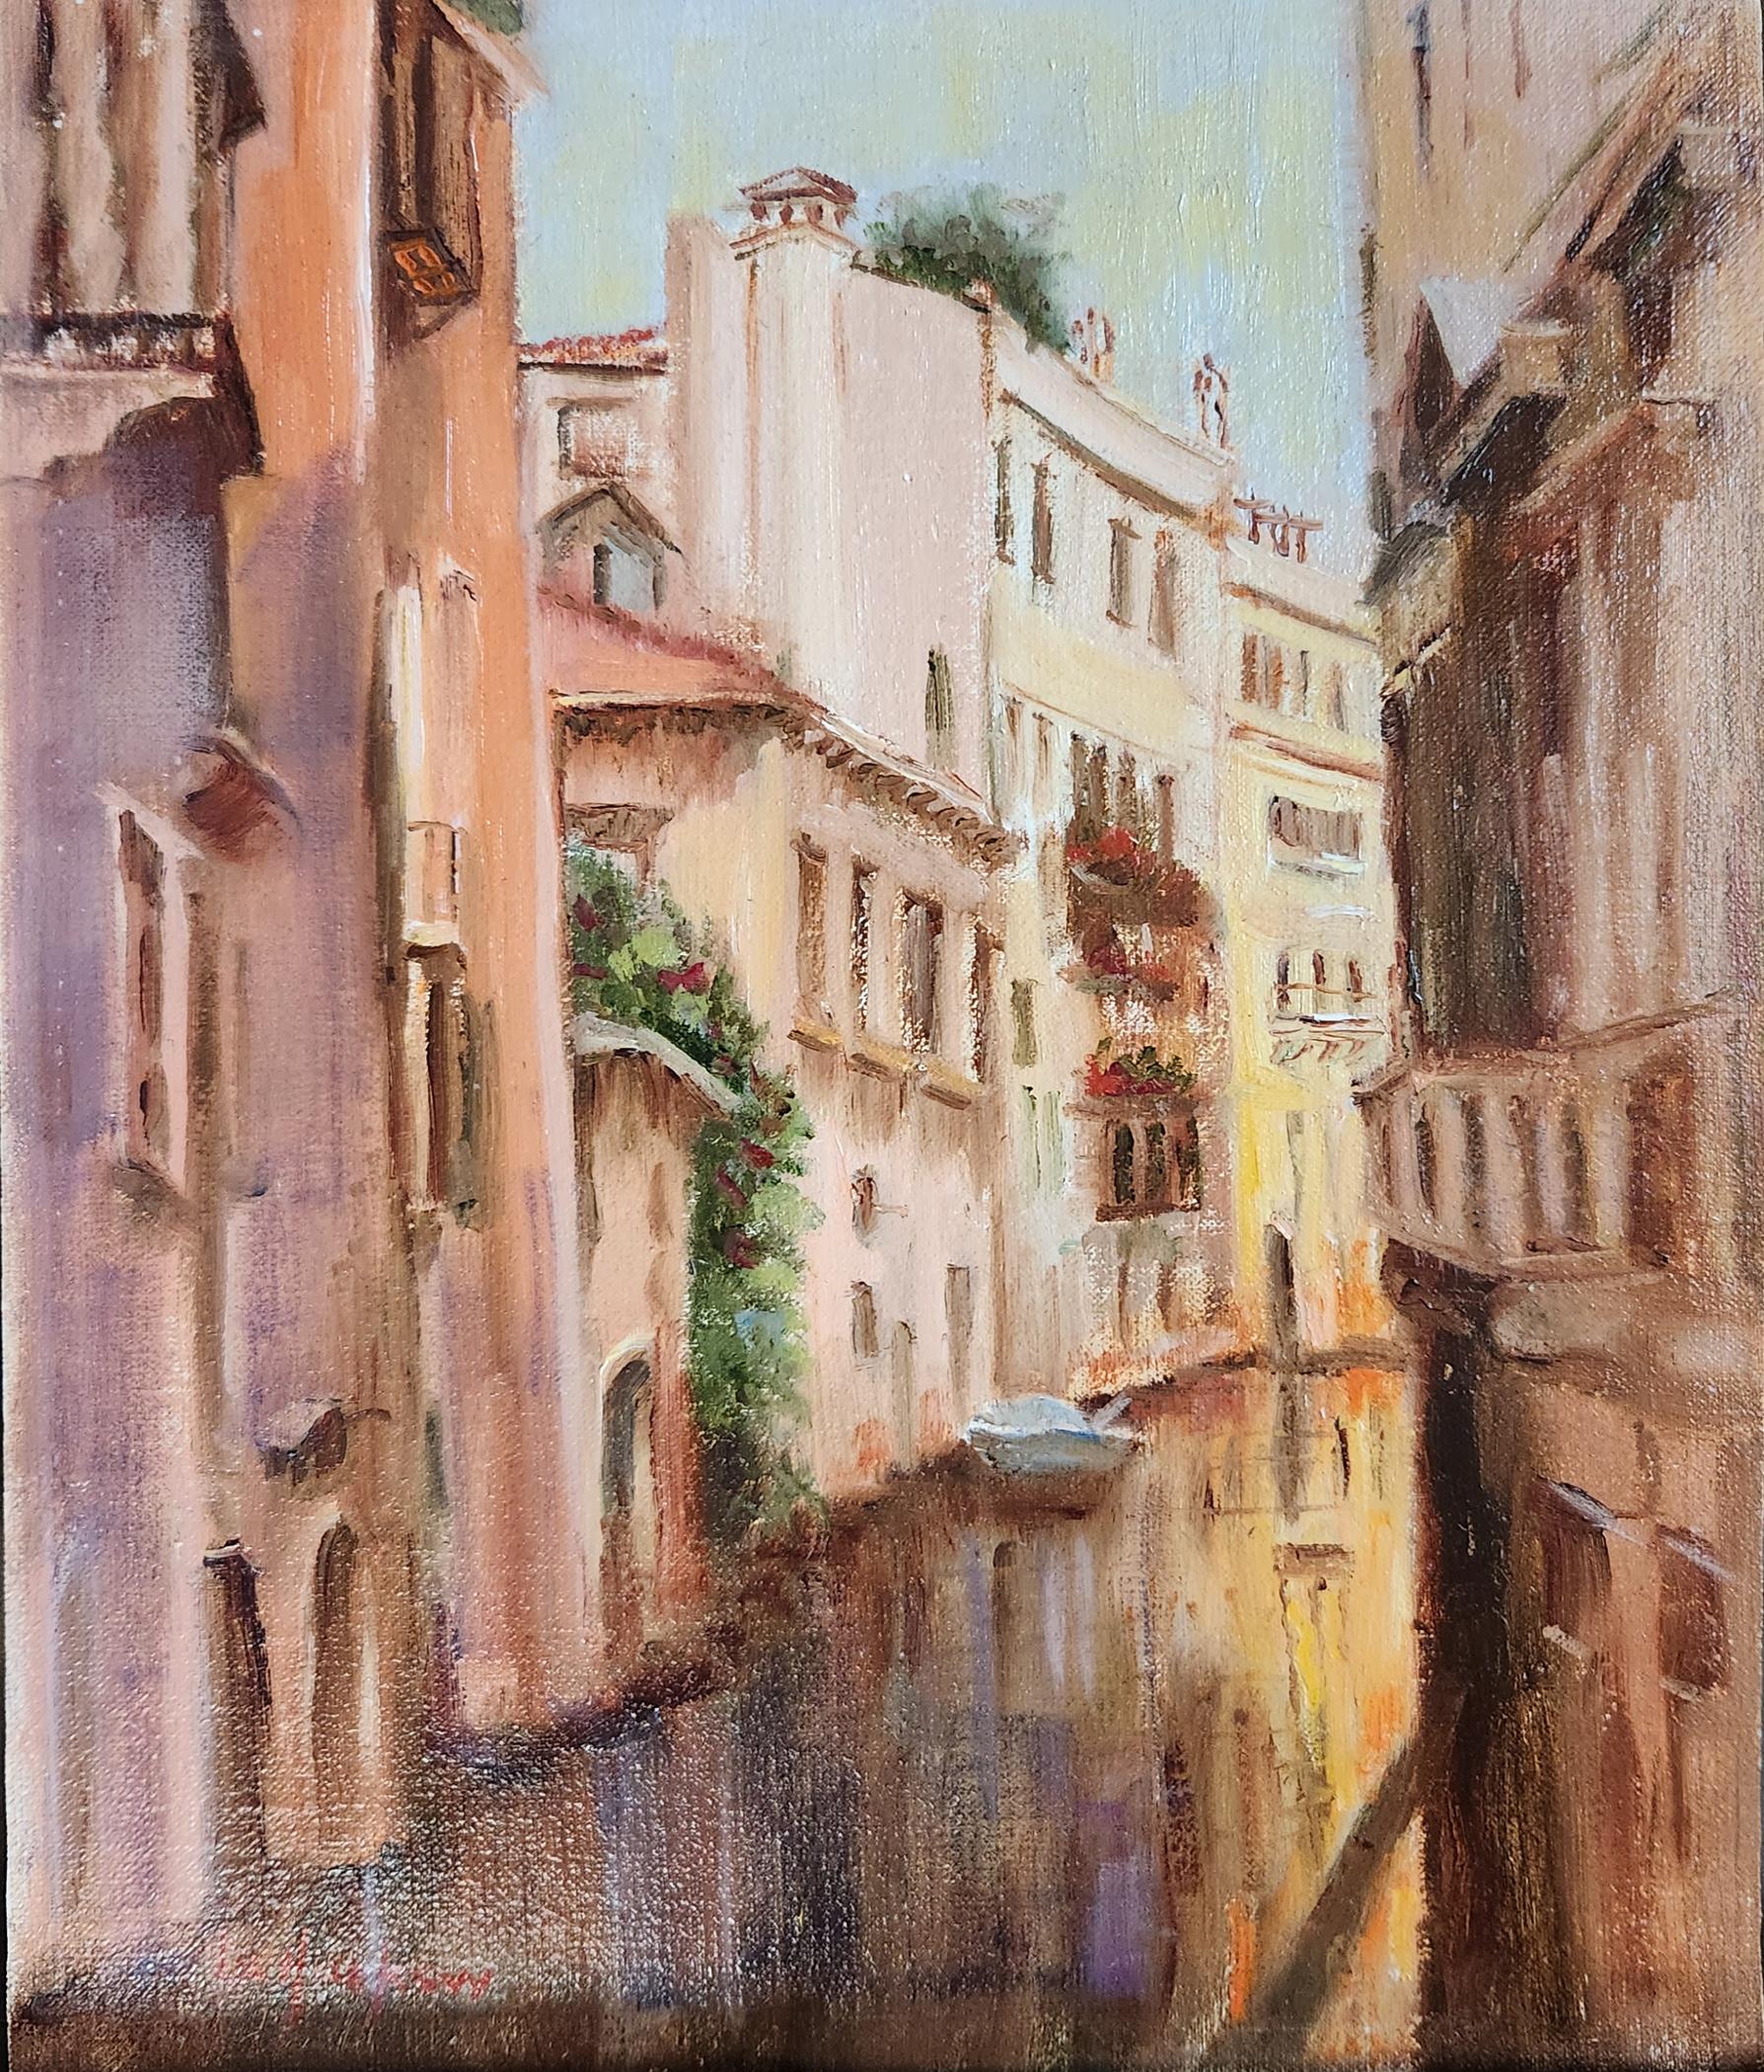 Splash of Light, Italie, 10x8" huile sur carton - Painting de Lu Haskew